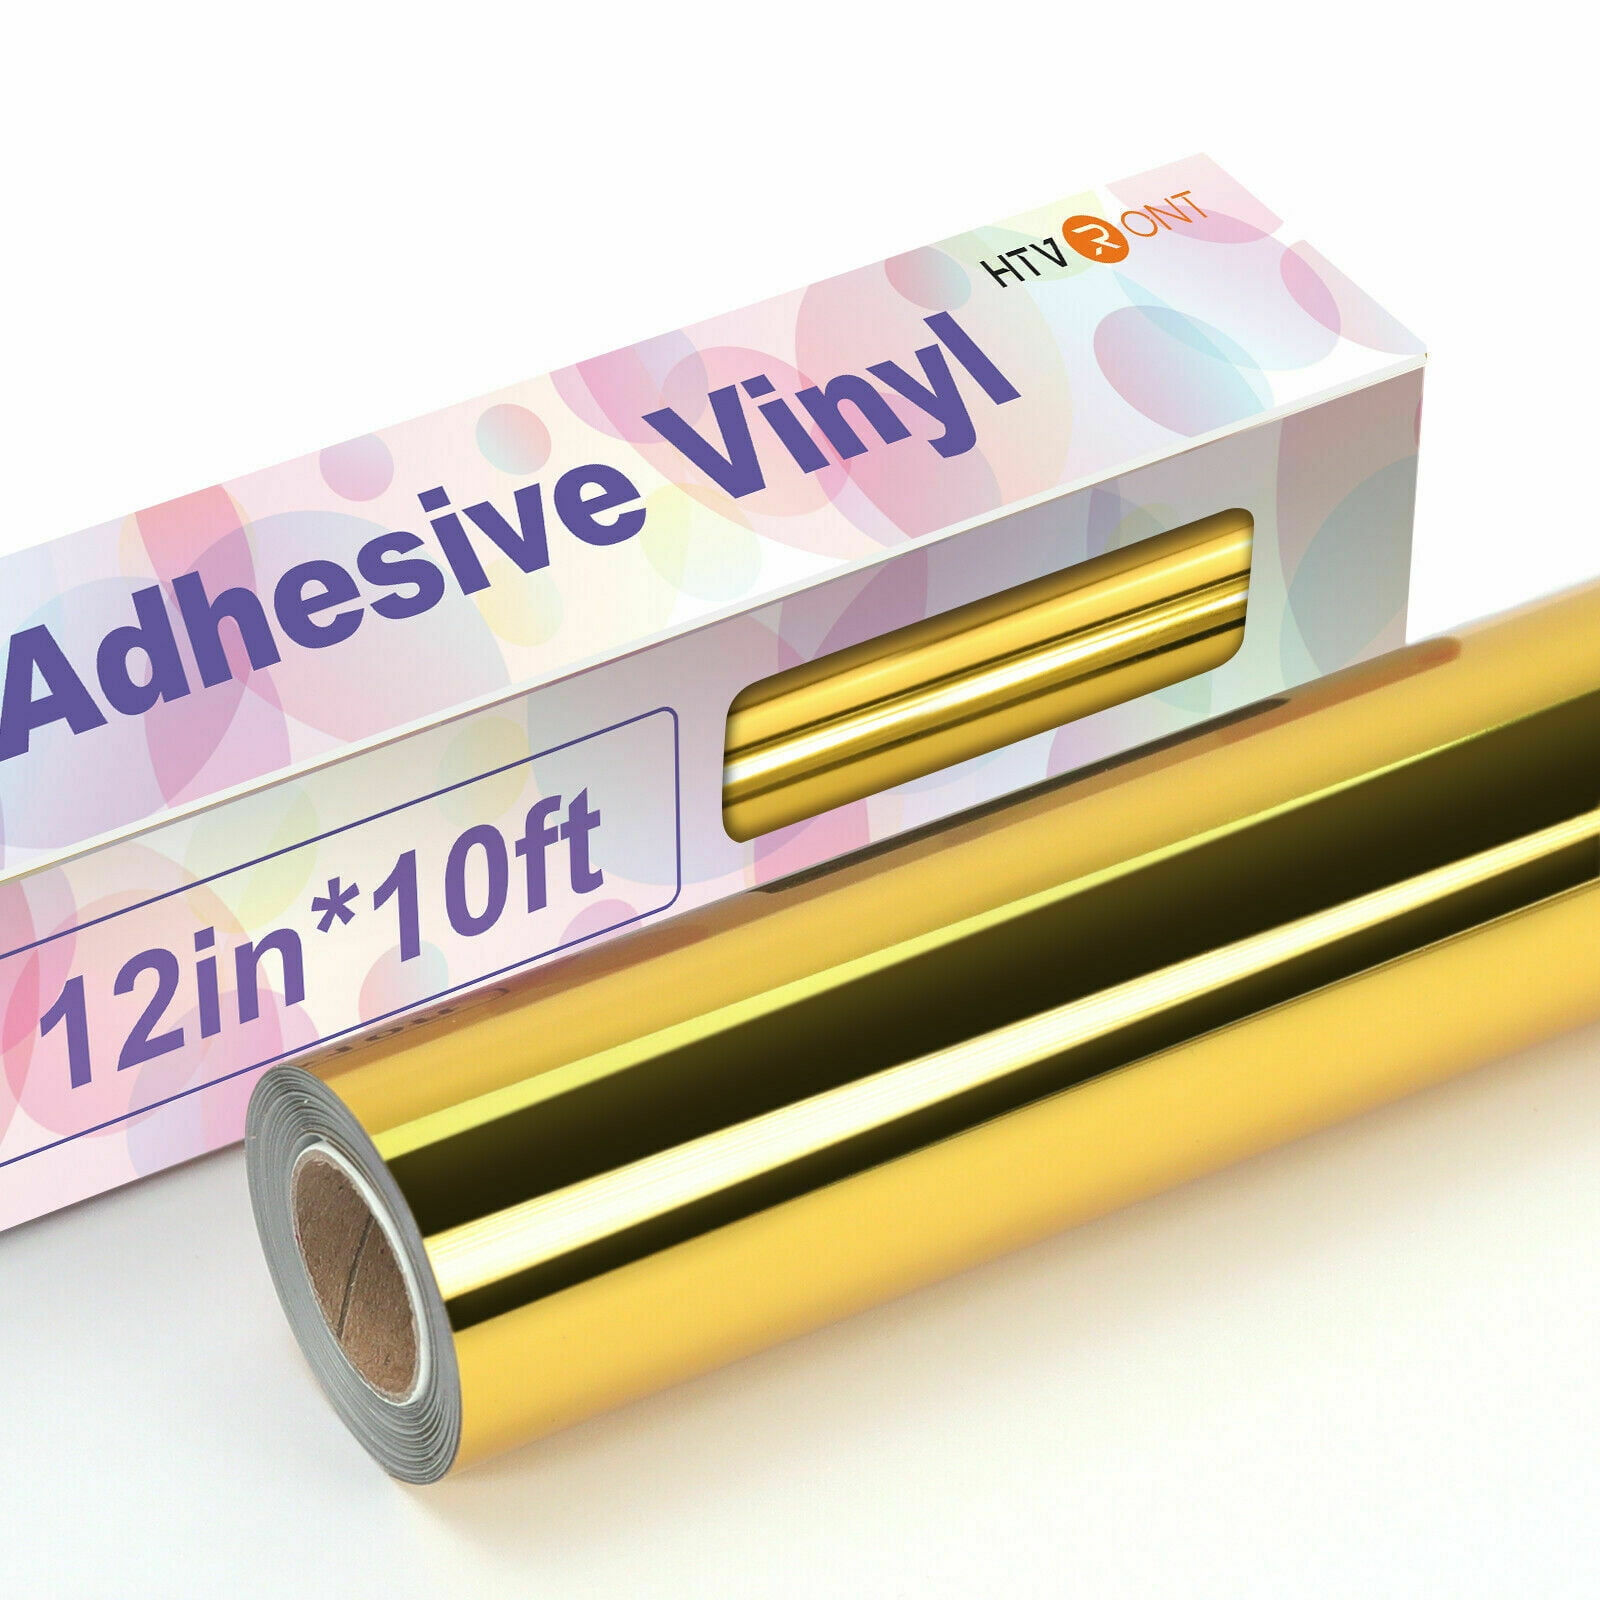 Glossy Permanent Adhesive Vinyl Sheet -12x12 7 Pack – HTVRONT